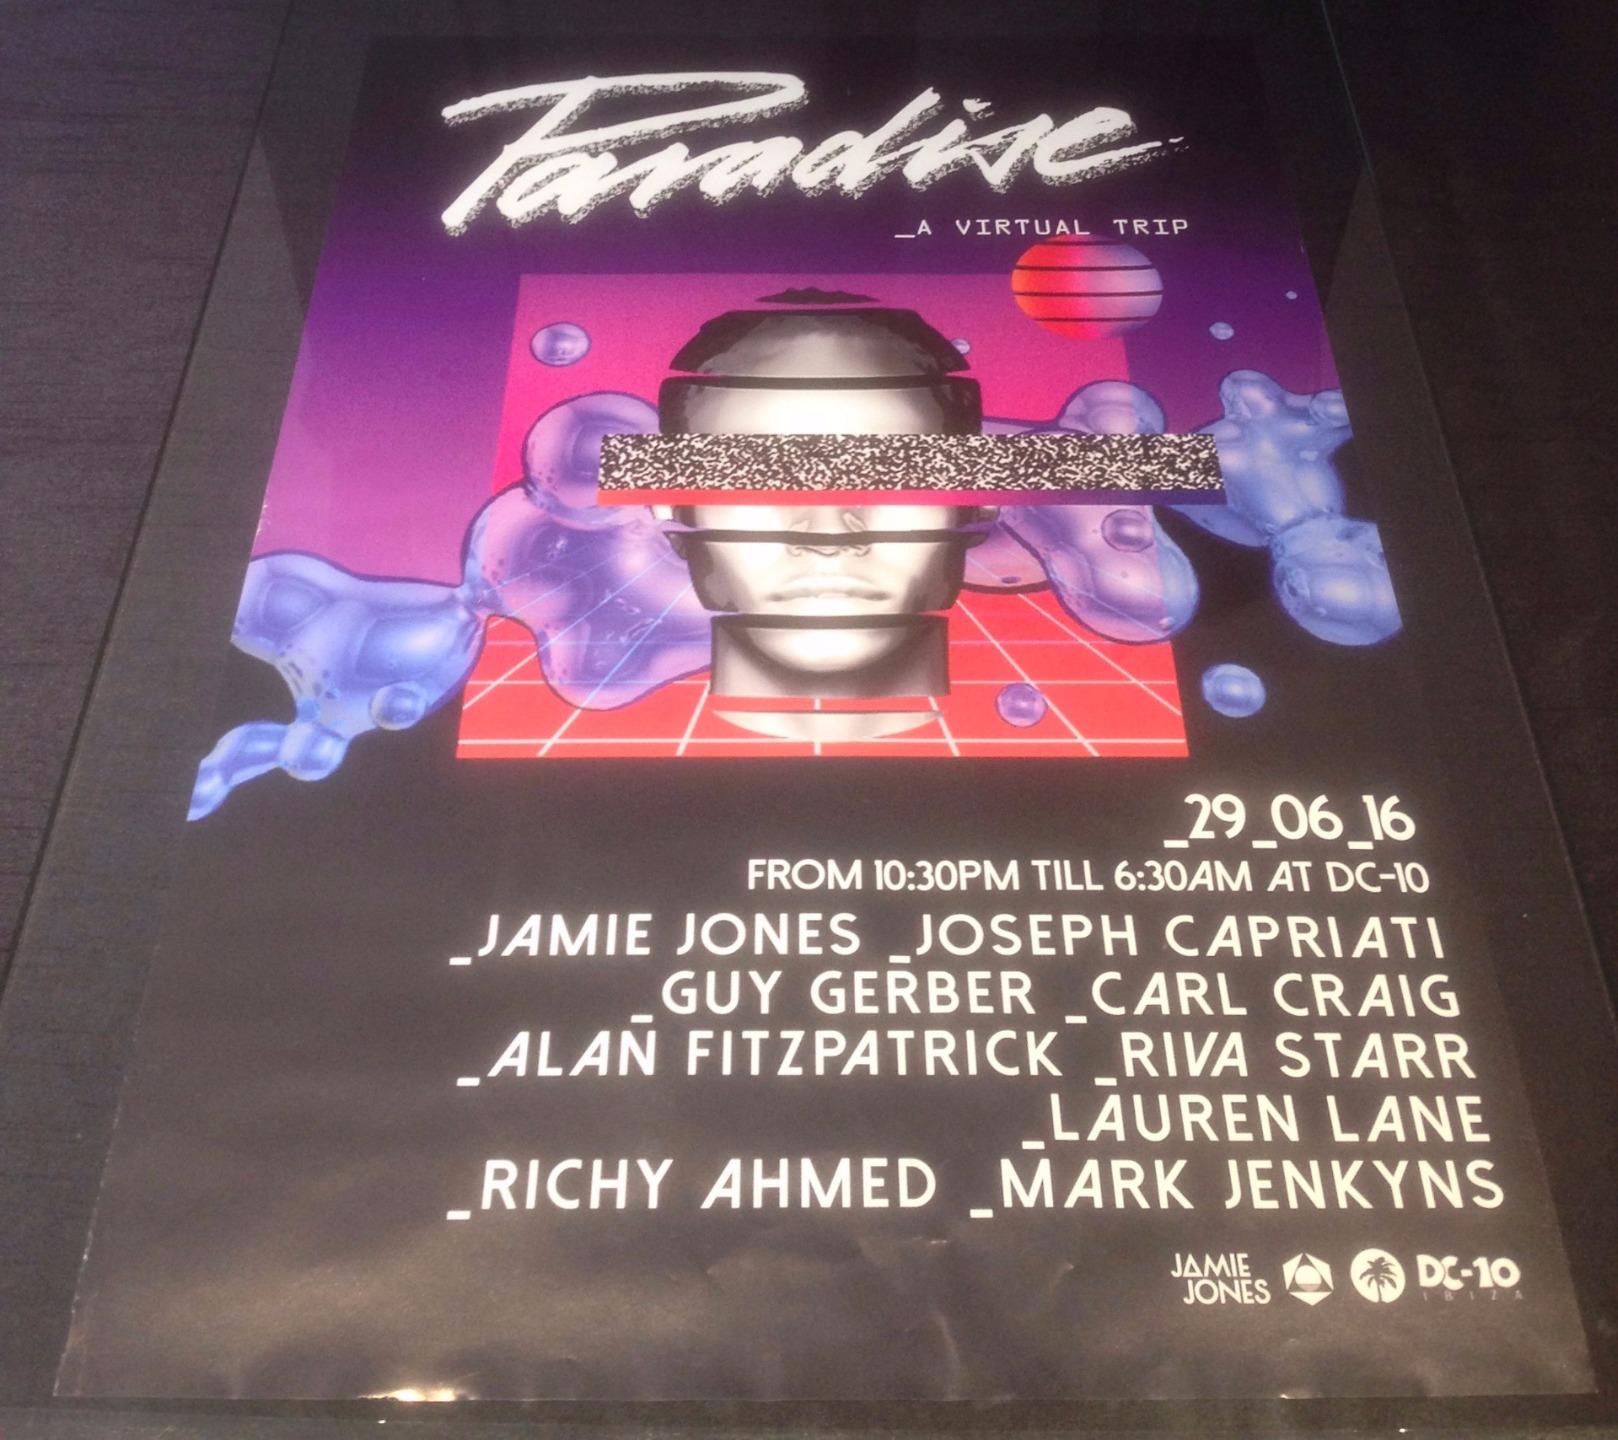 paradise 2016 (jamie jones) @ dc-10 club - ibiza club posters - techno music dj image 1